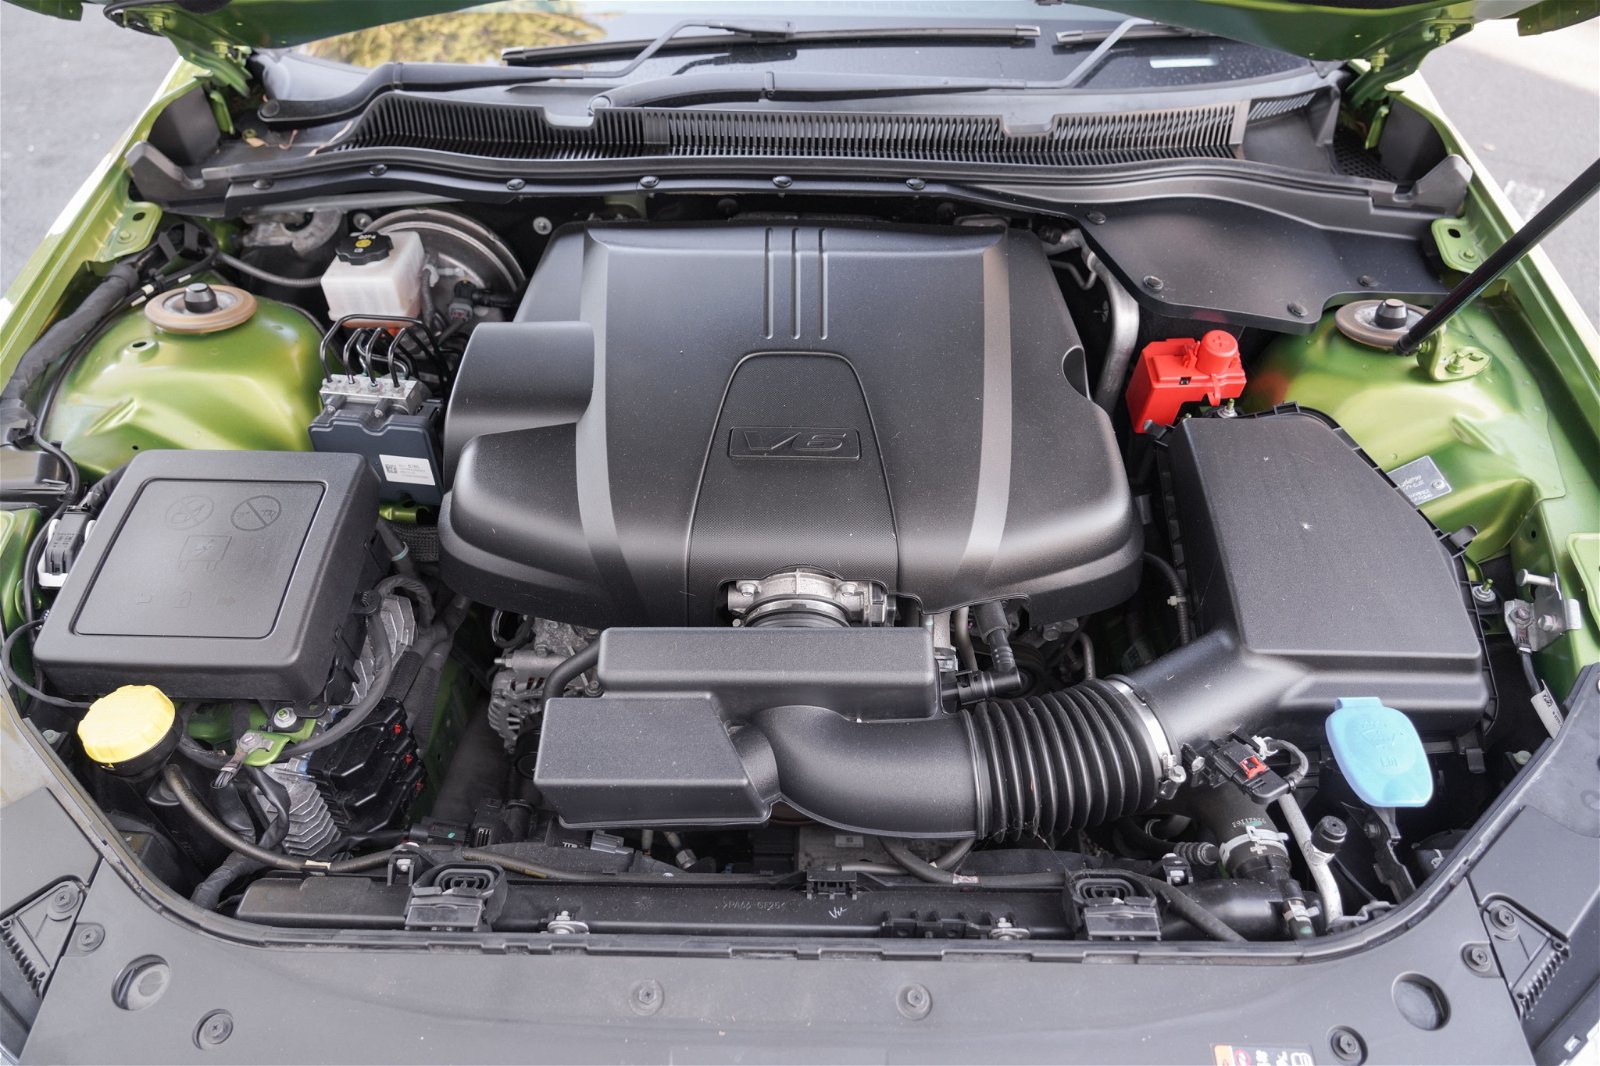 2016 Holden Commodore VF2 SV6 3.6P 6A 4Dr Sedan